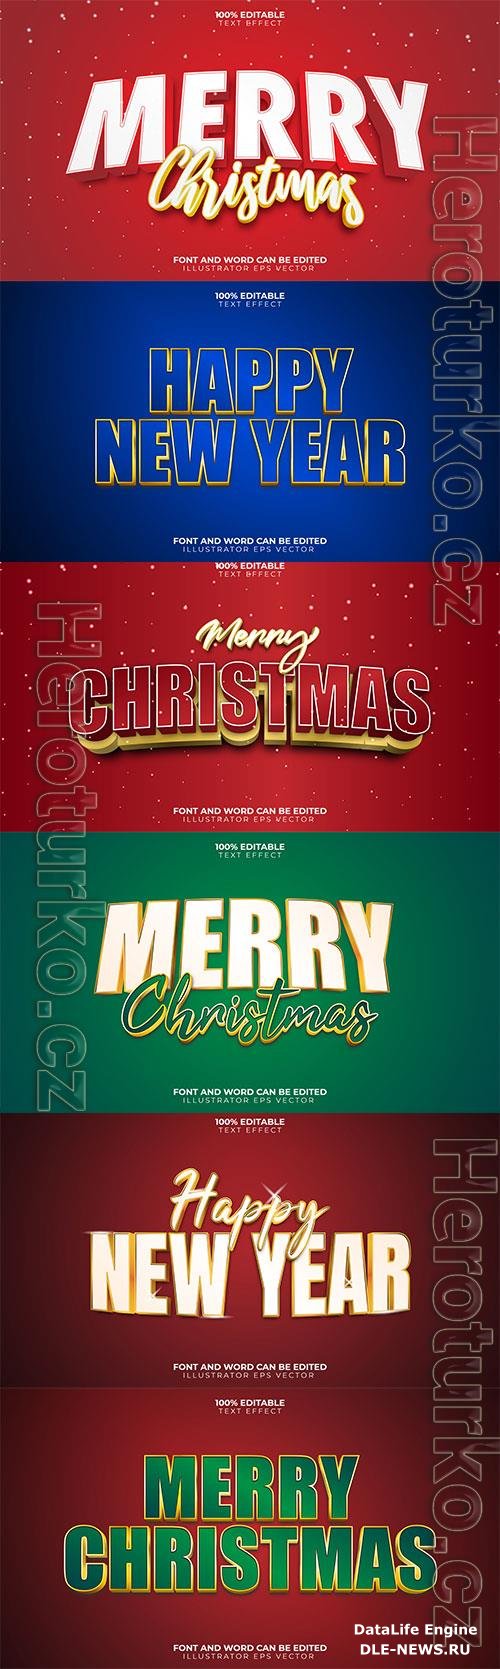 2022 New year, Merry christmas editable text effect premium vector vol 11